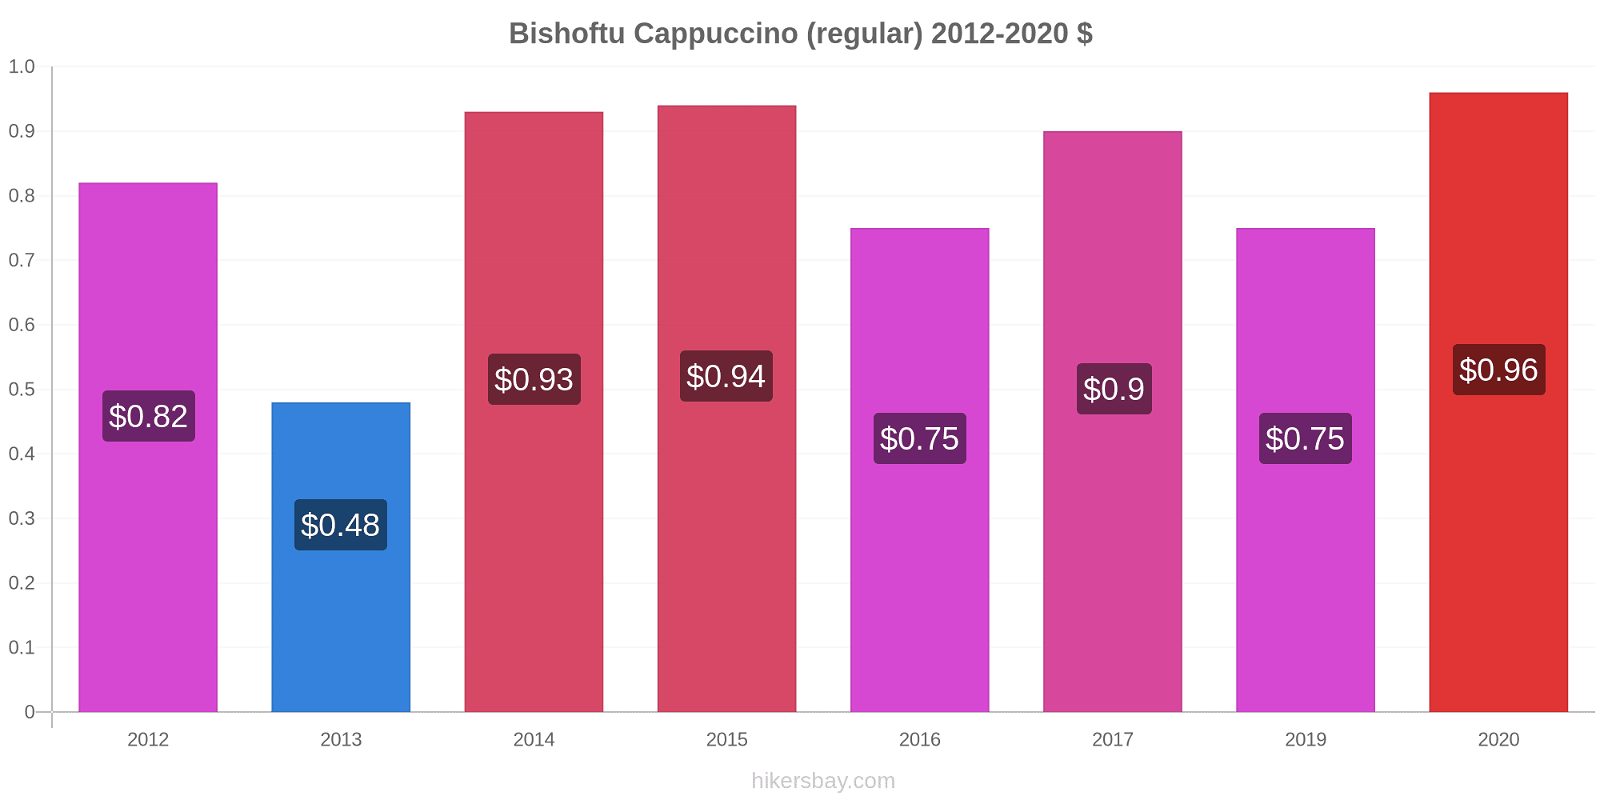 Bishoftu price changes Cappuccino (regular) hikersbay.com